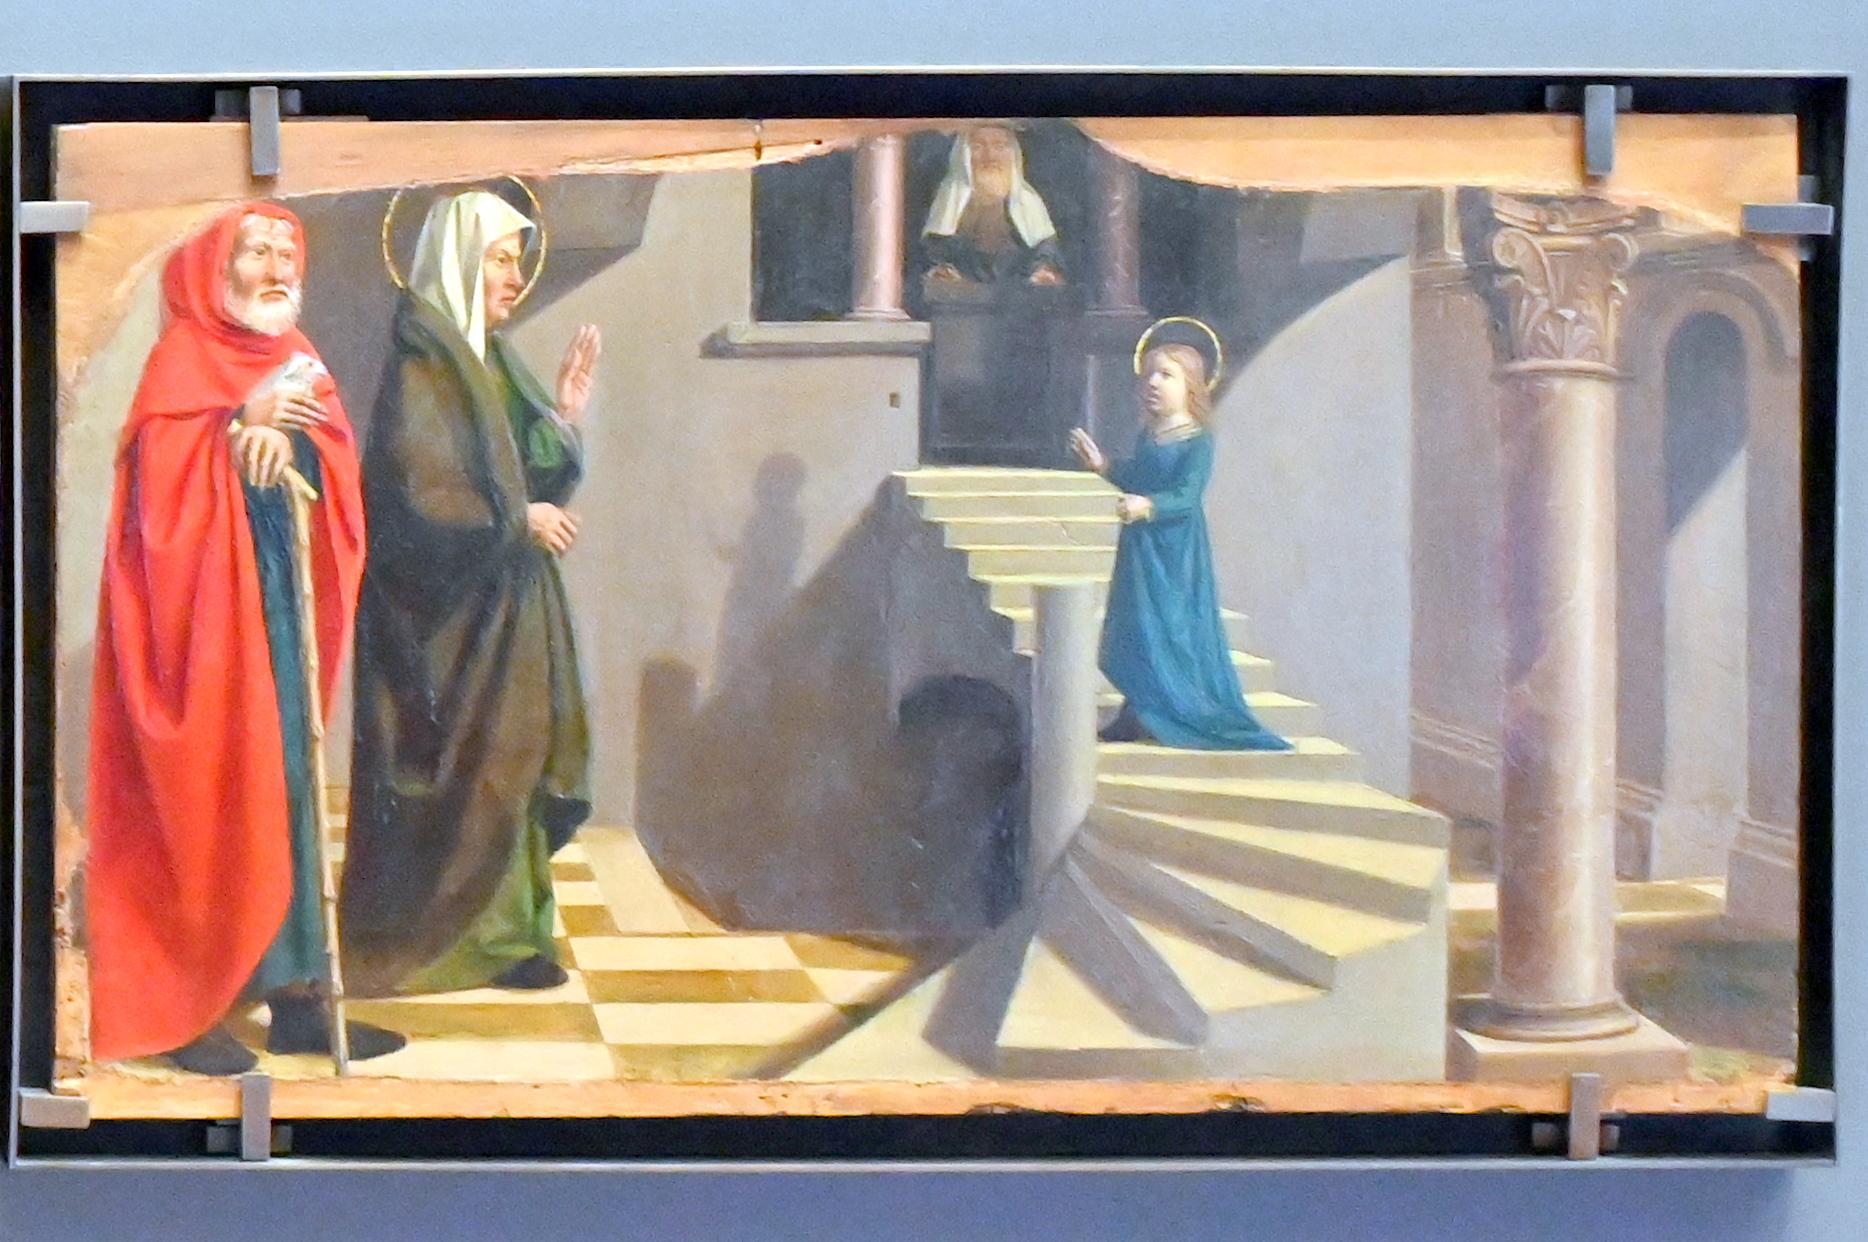 Nicolas Dipre (1500), Darstellung der Jungfrau Maria im Tempel, Paris, Musée du Louvre, Saal 832, um 1500